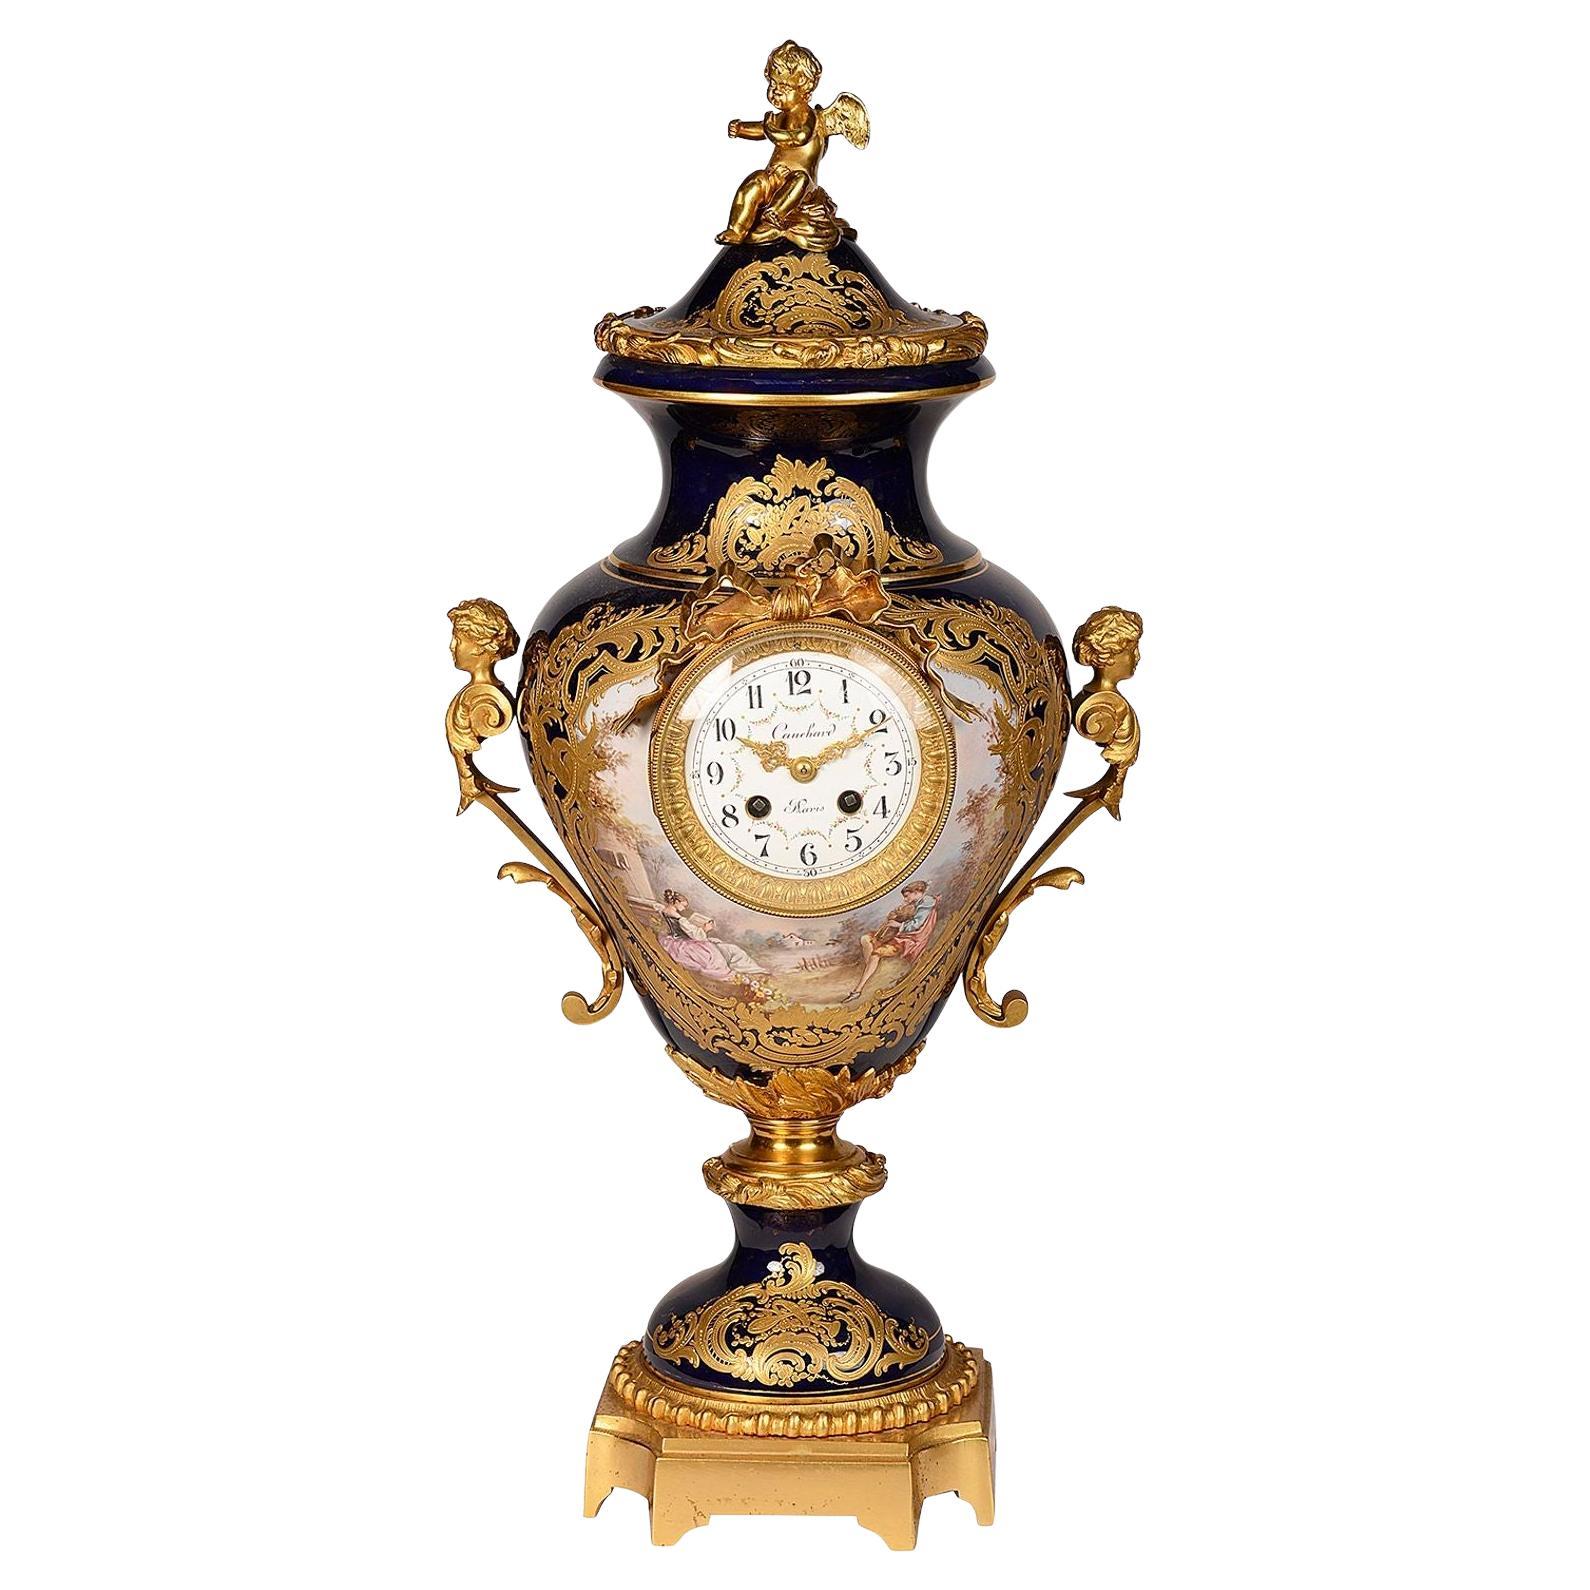 French Sevres style porcelain vase / mantel clock.